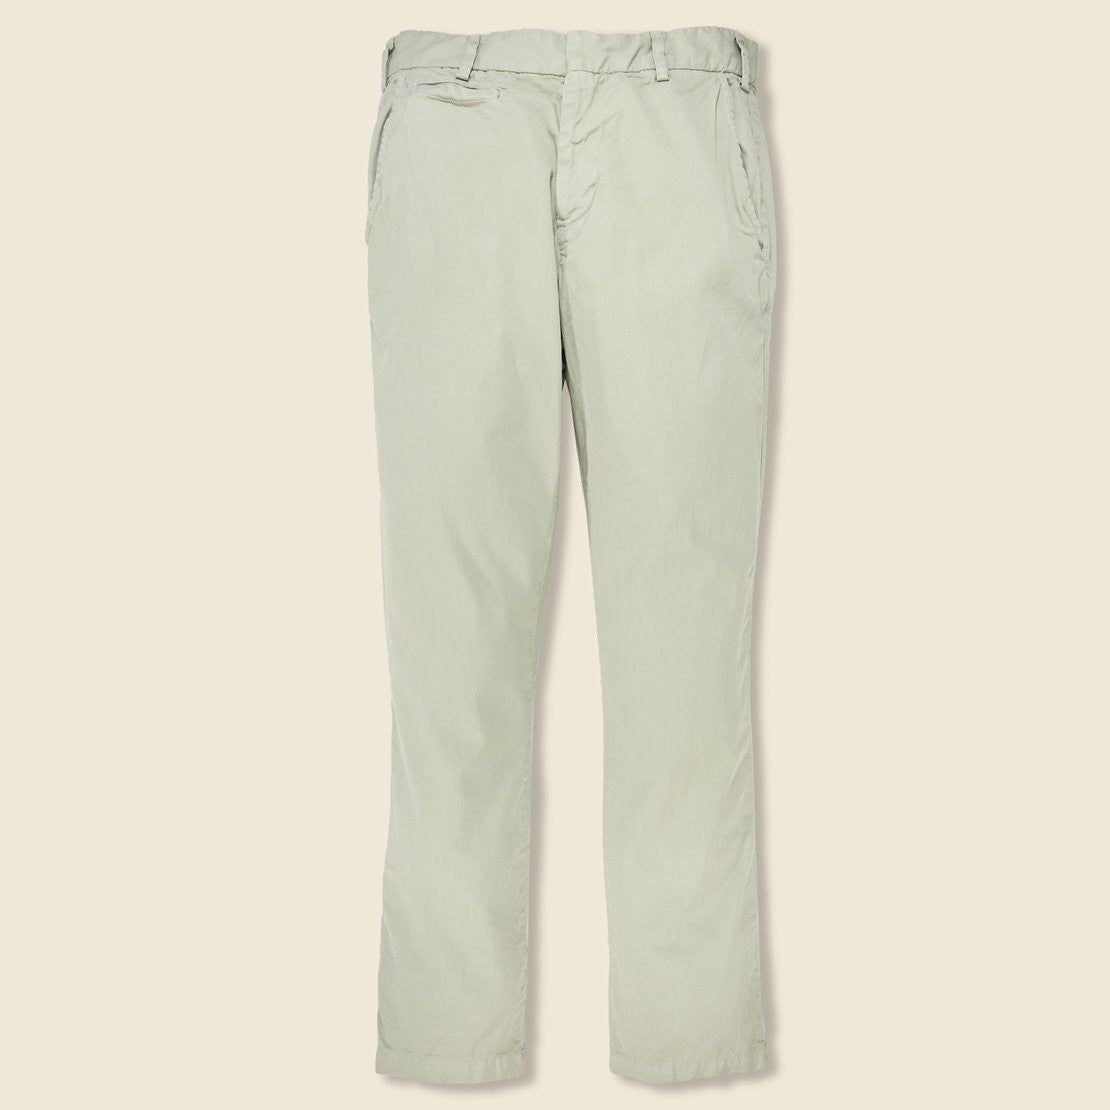 Slim Twill Trouser - Light Khaki - Save Khaki - STAG Provisions - Pants - Twill